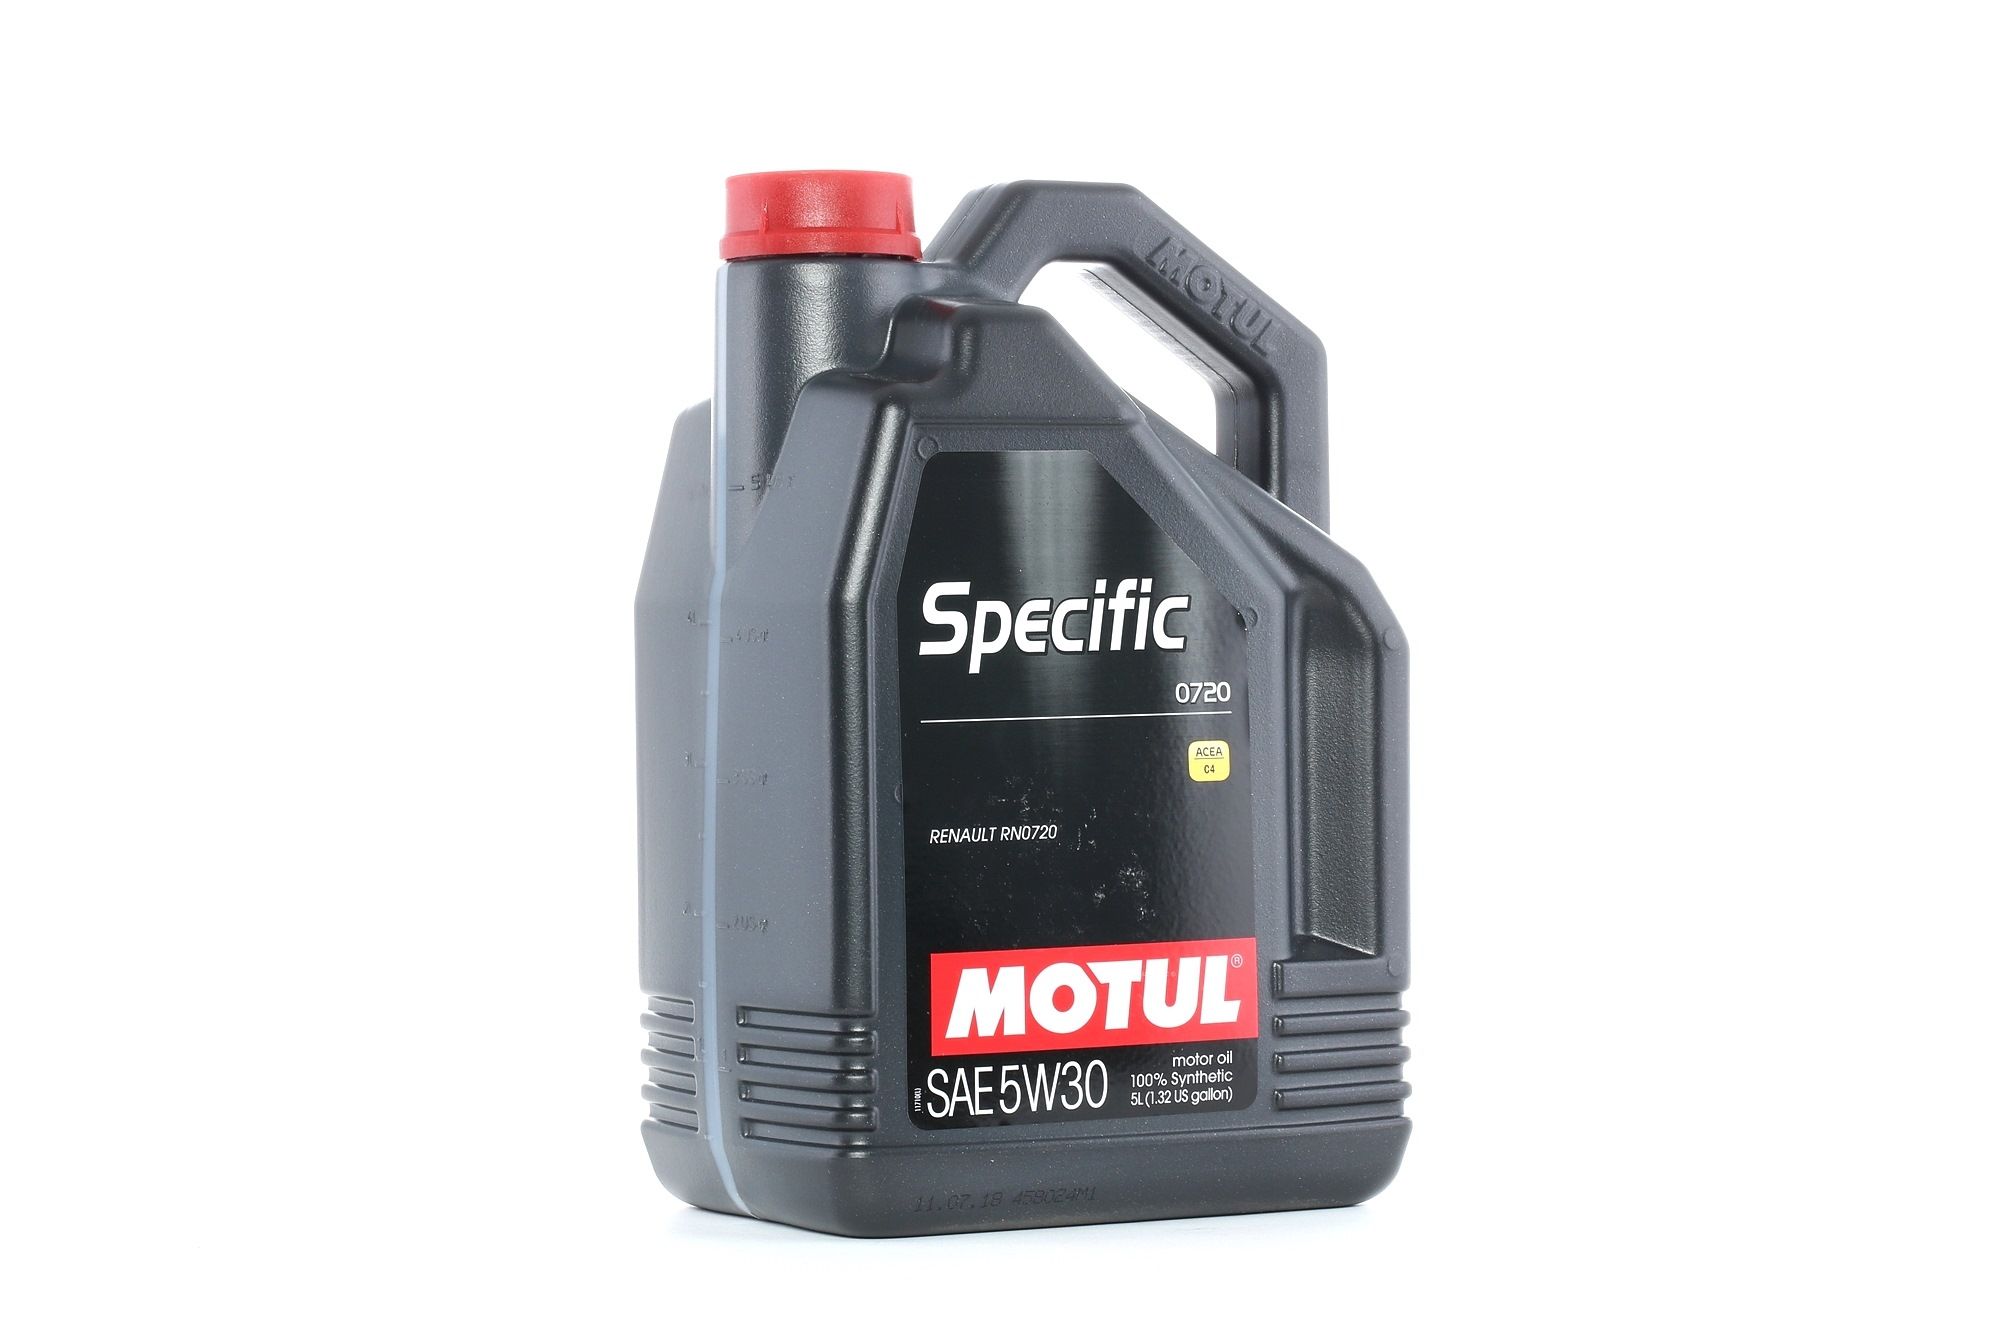 C4 MOTUL SPECIFIC, 0720 5W-30, 5l, Synthetiköl Motoröl 102209 günstig kaufen